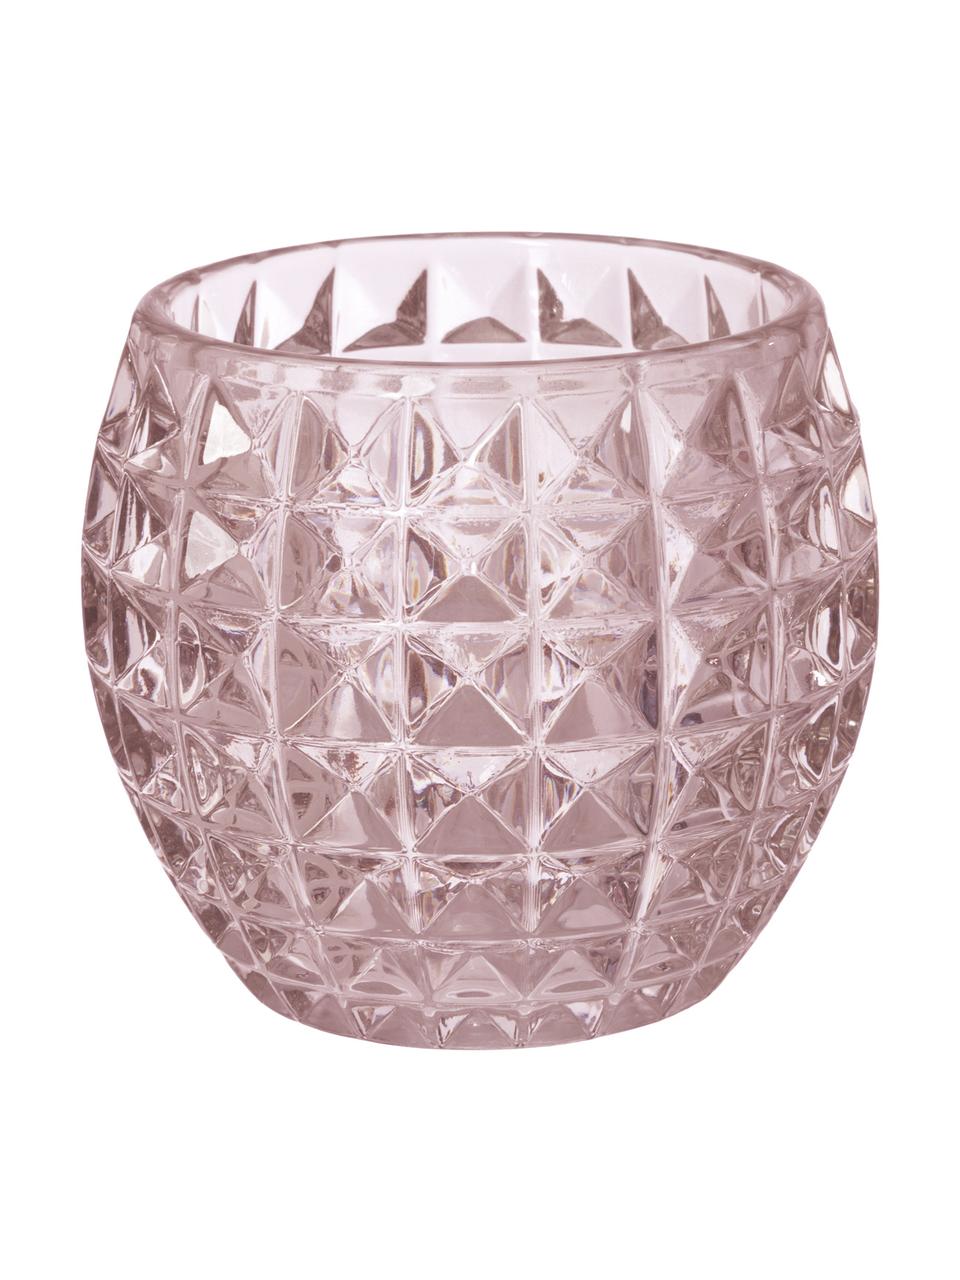 Teelichthalter-Set Aliza, 3er-Set, Glas, Rosatöne, Je Ø 10 x H 9 cm